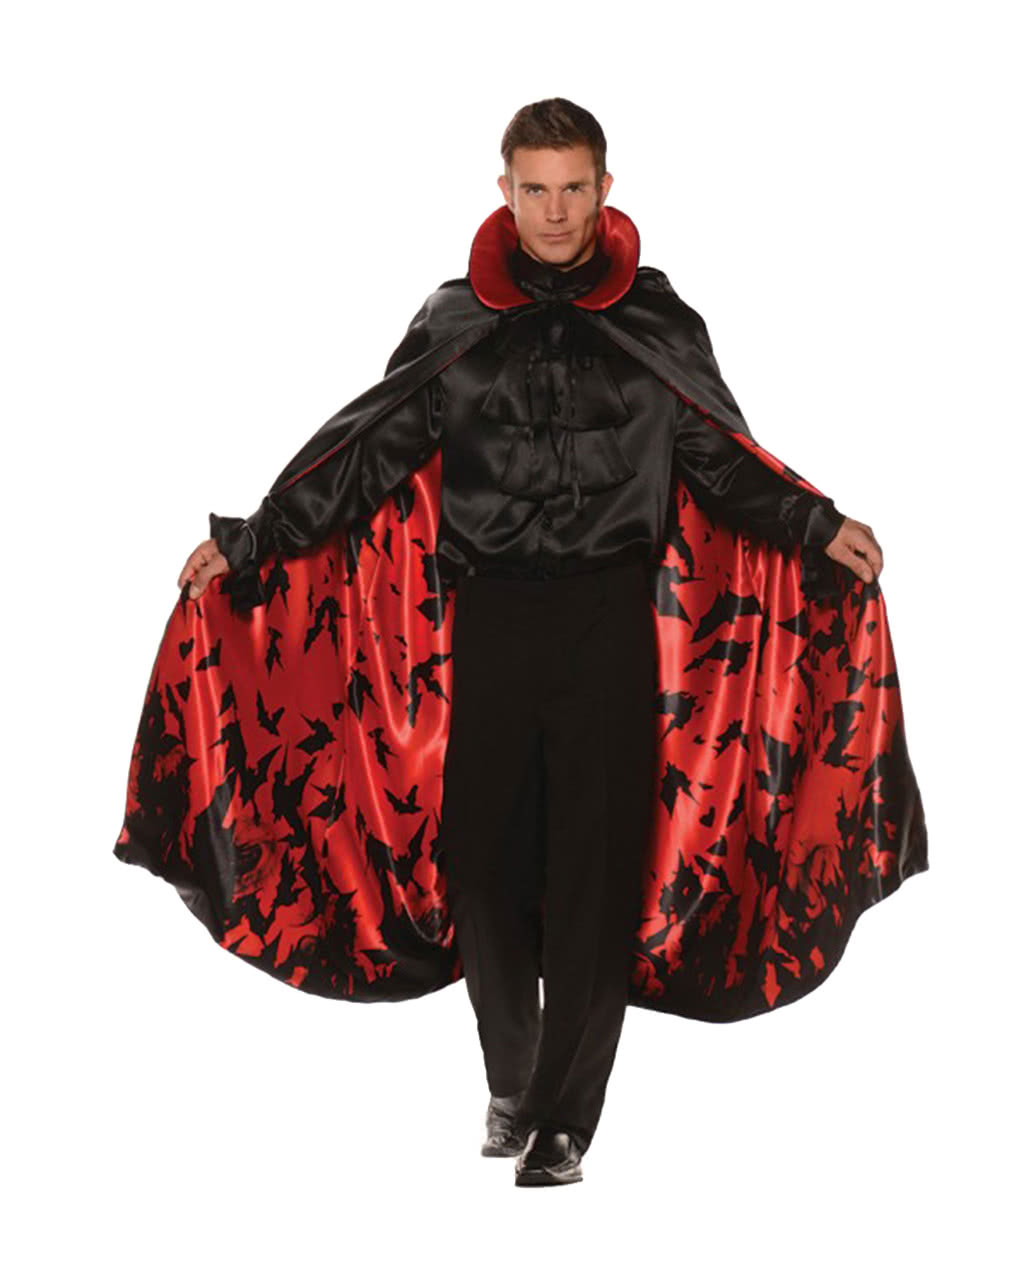 Vampir Umhang mit Fledermaus Motiv  Halloween Kostüme